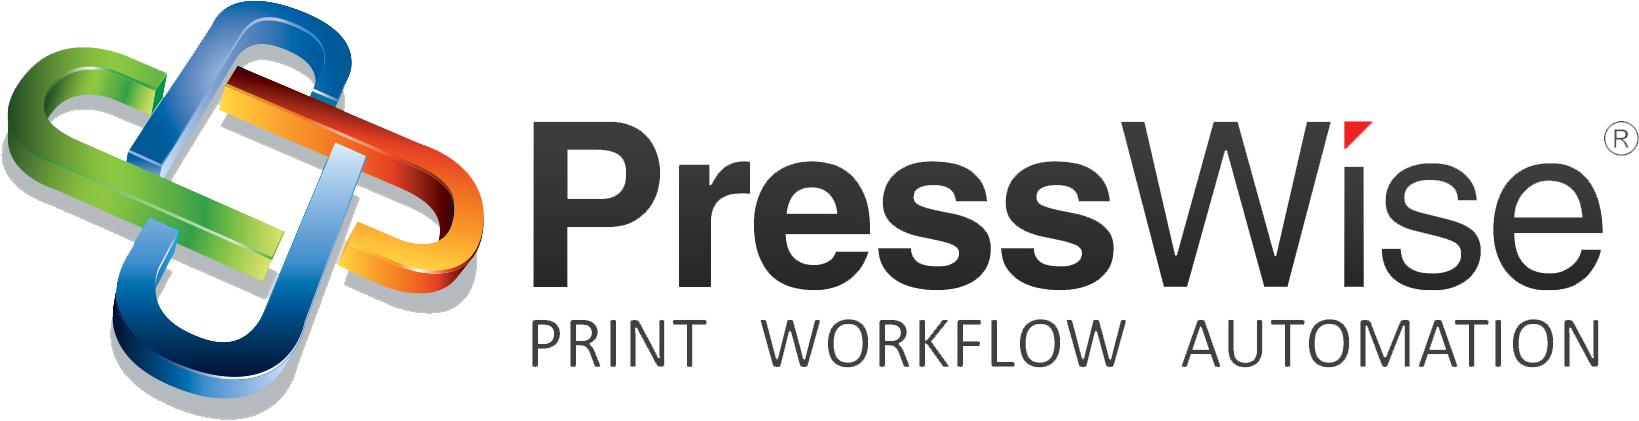 presswise logo